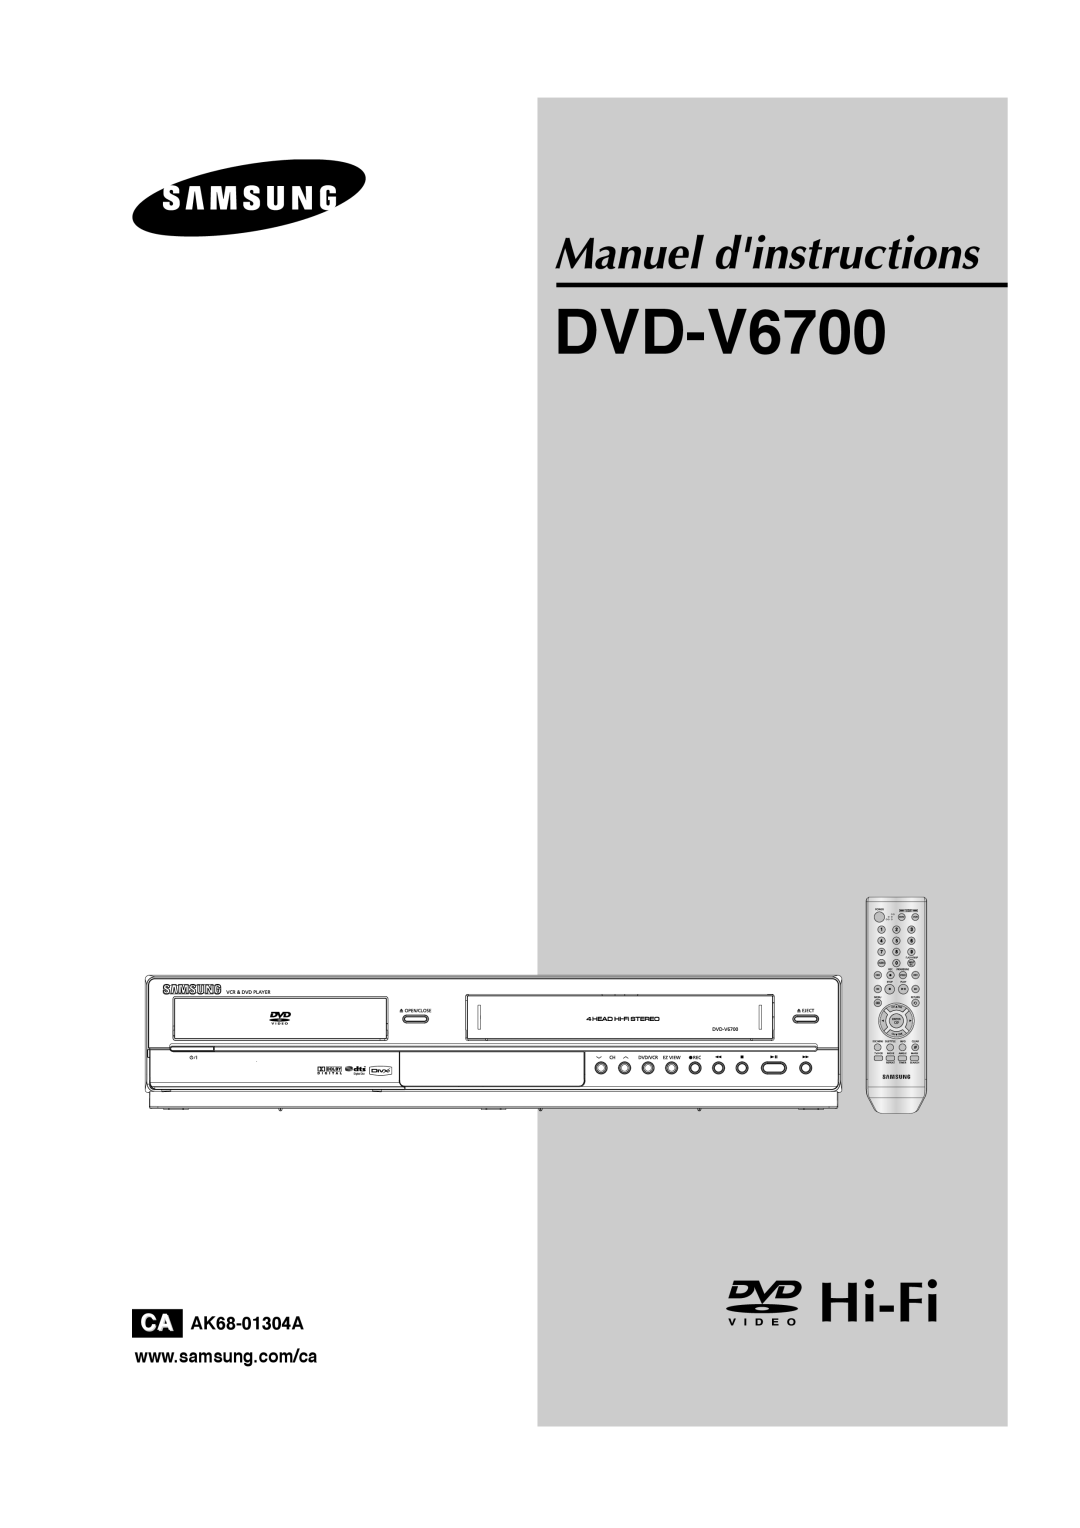 Samsung V6700-XAC, 20070205090323359 instruction manual Manuel dinstructions, DVD-V6700, CA AK68-01304A 